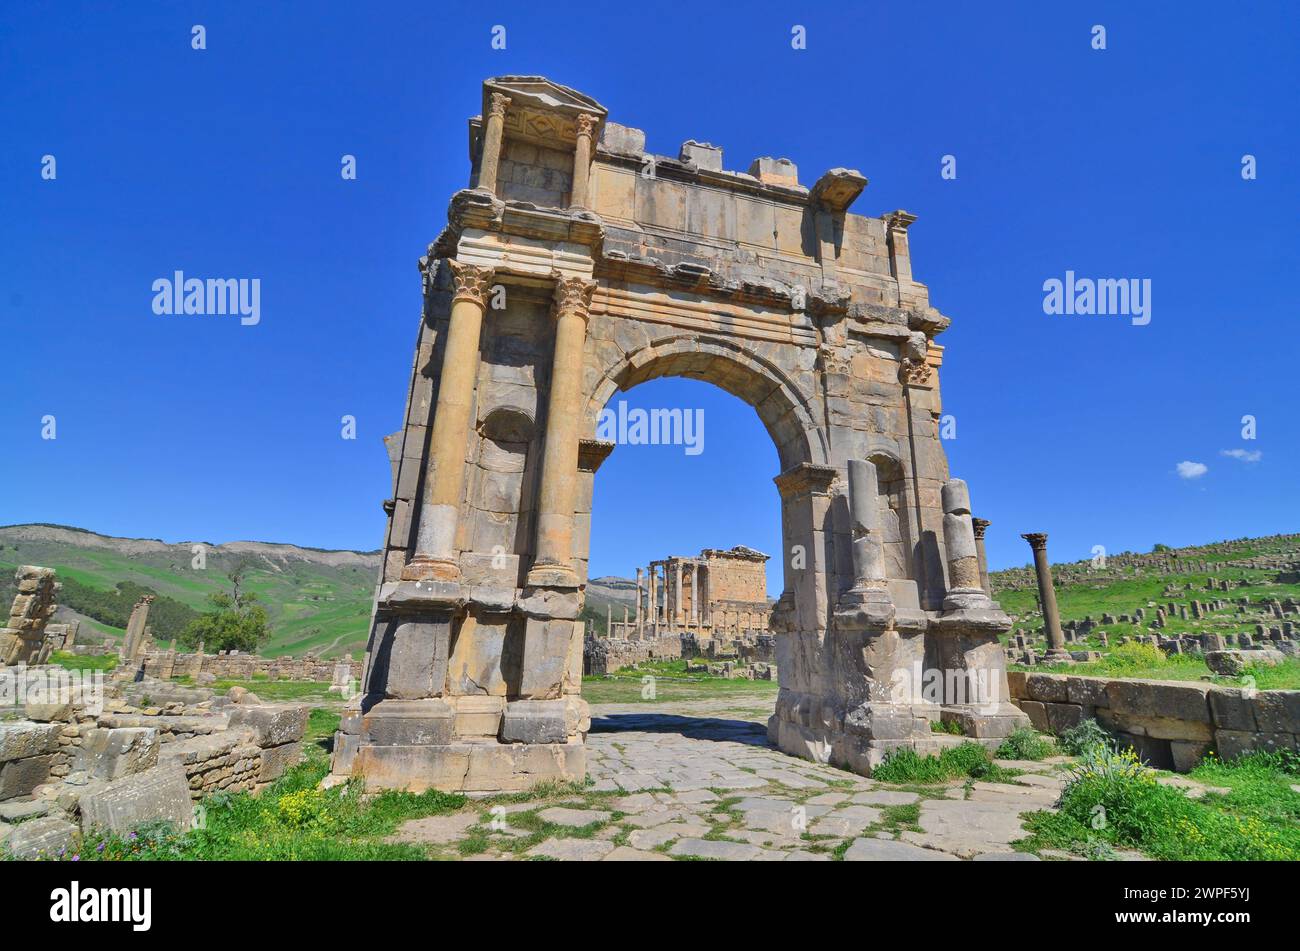 The Arch of Caracalla located at Djémila in Algeria (Cuicul) Stock Photo